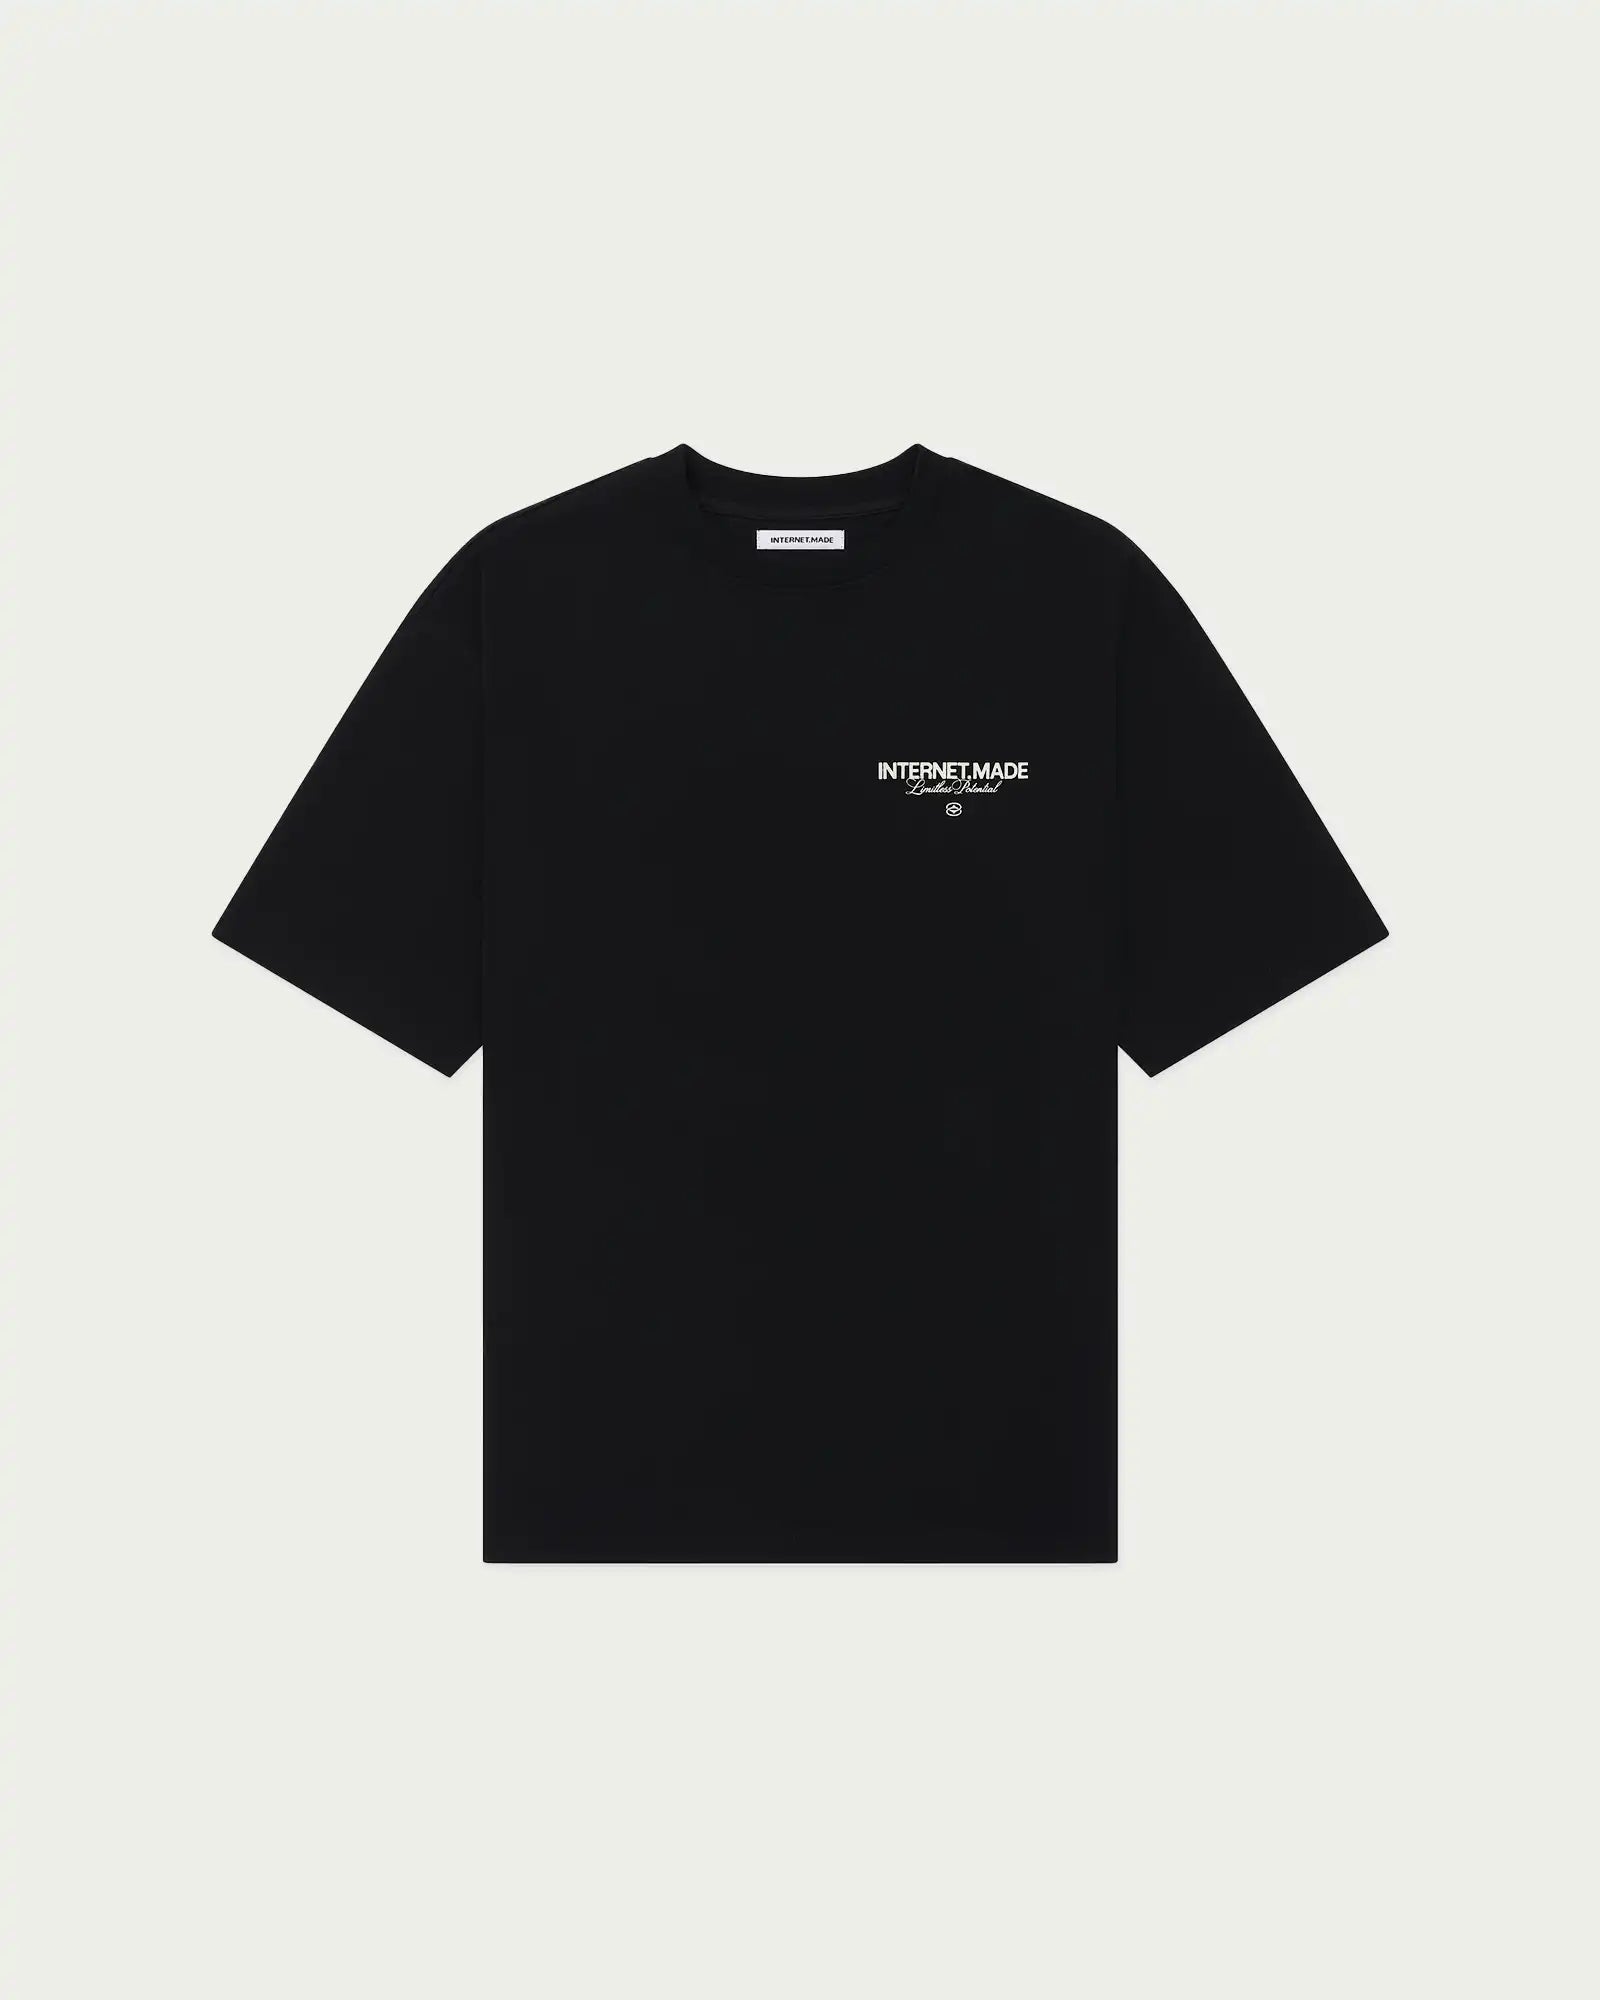 Limitless Potential T-Shirt / Black – Internet Made